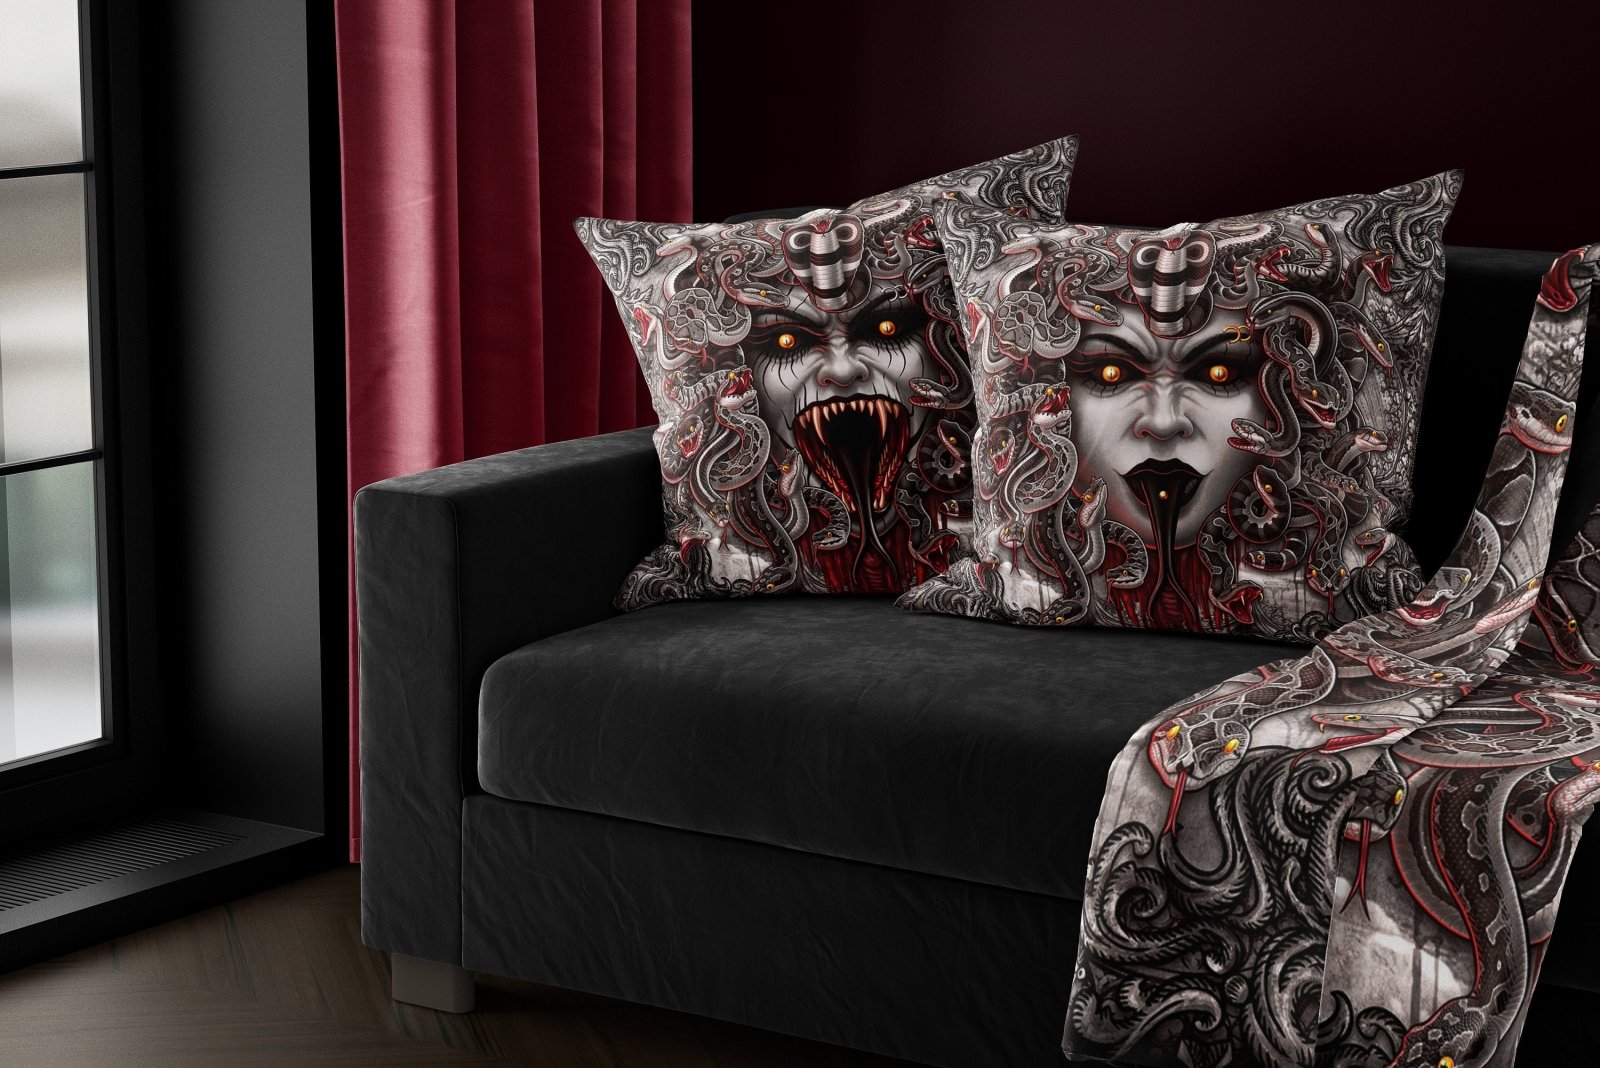 Gothic Throw Pillow, Decorative Accent Cushion, Medusa, Goth Room Decor, Horror Art, Alternative Home - Grey Snakes, Rage - Abysm Internal